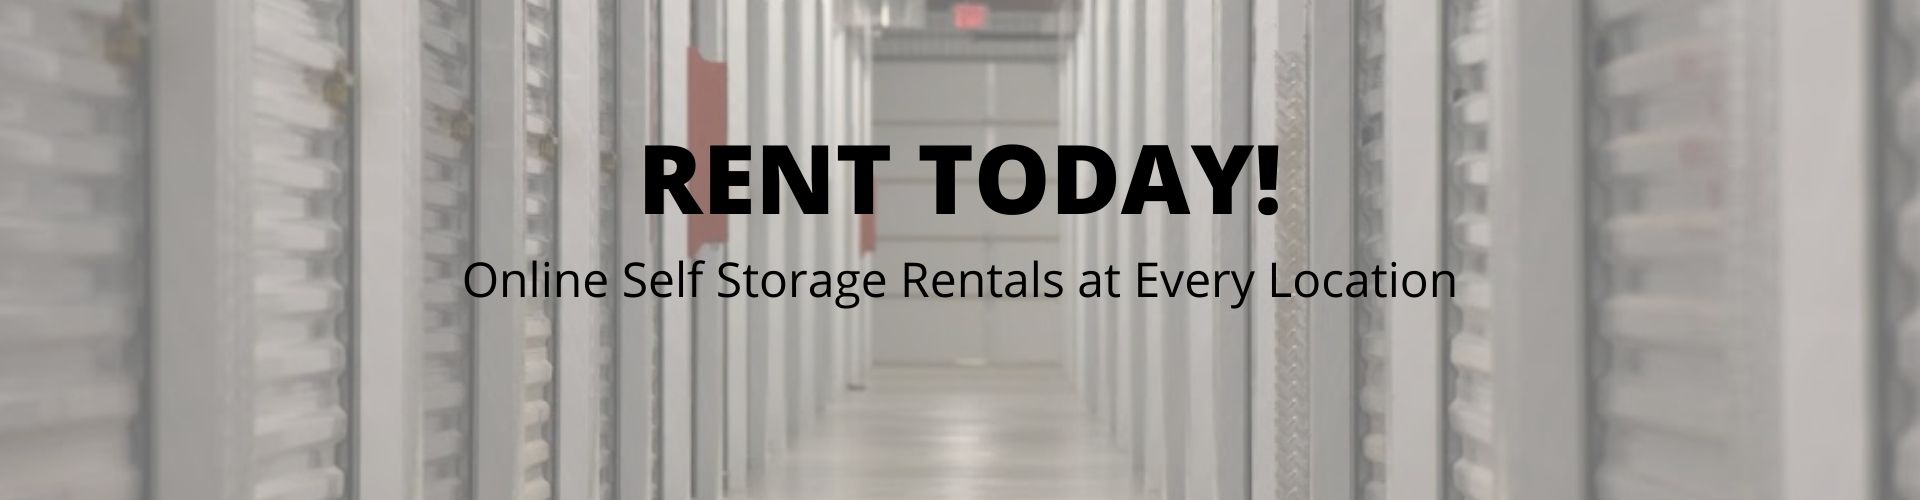 online storage rentals at Macoby Self Storage